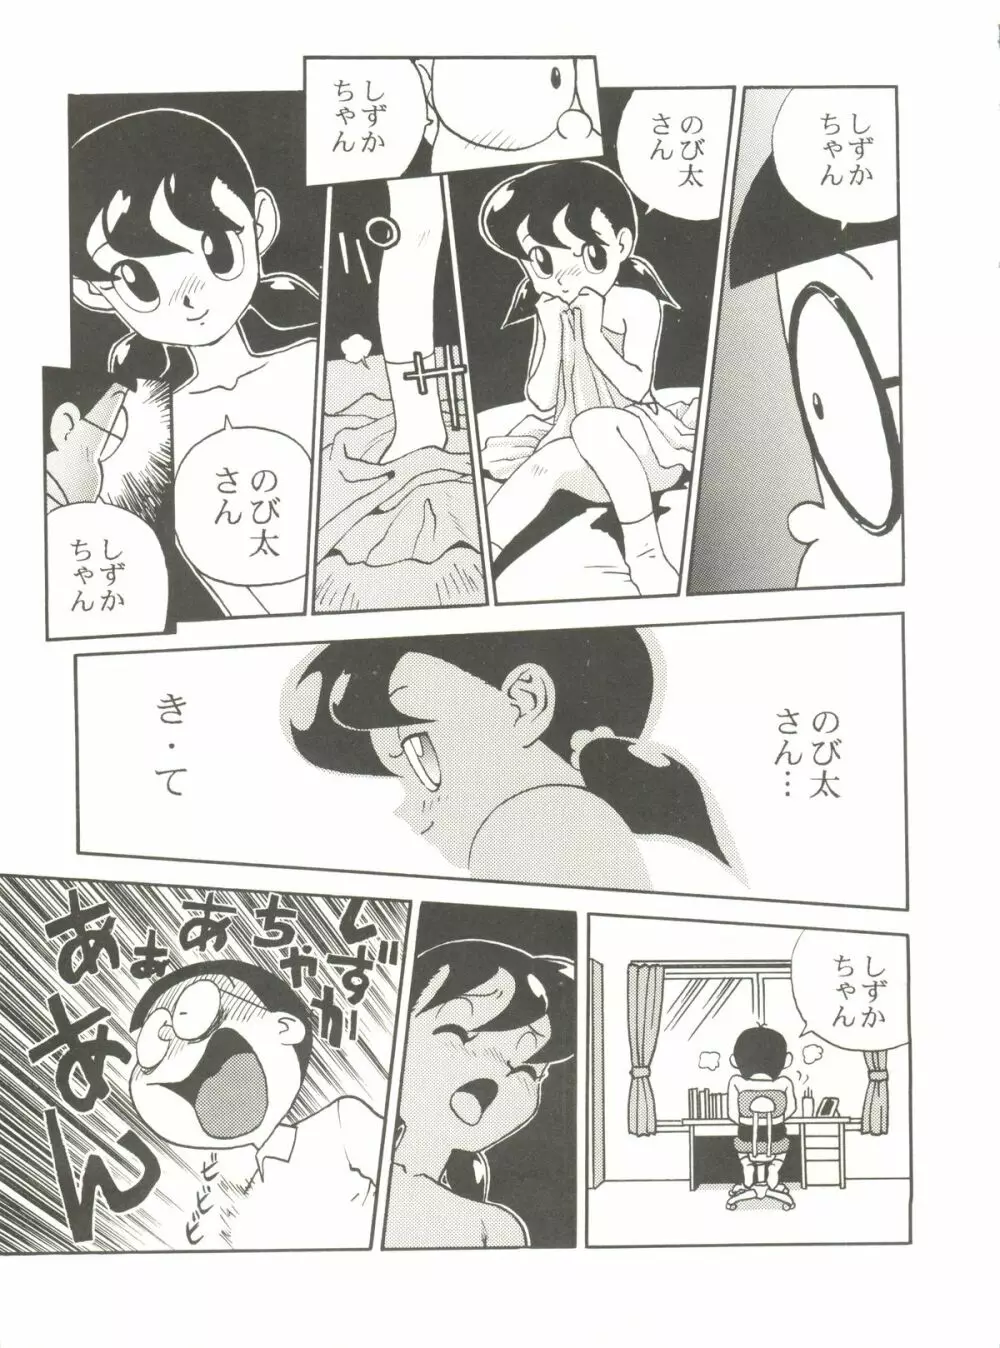 恐悦至極 - page69